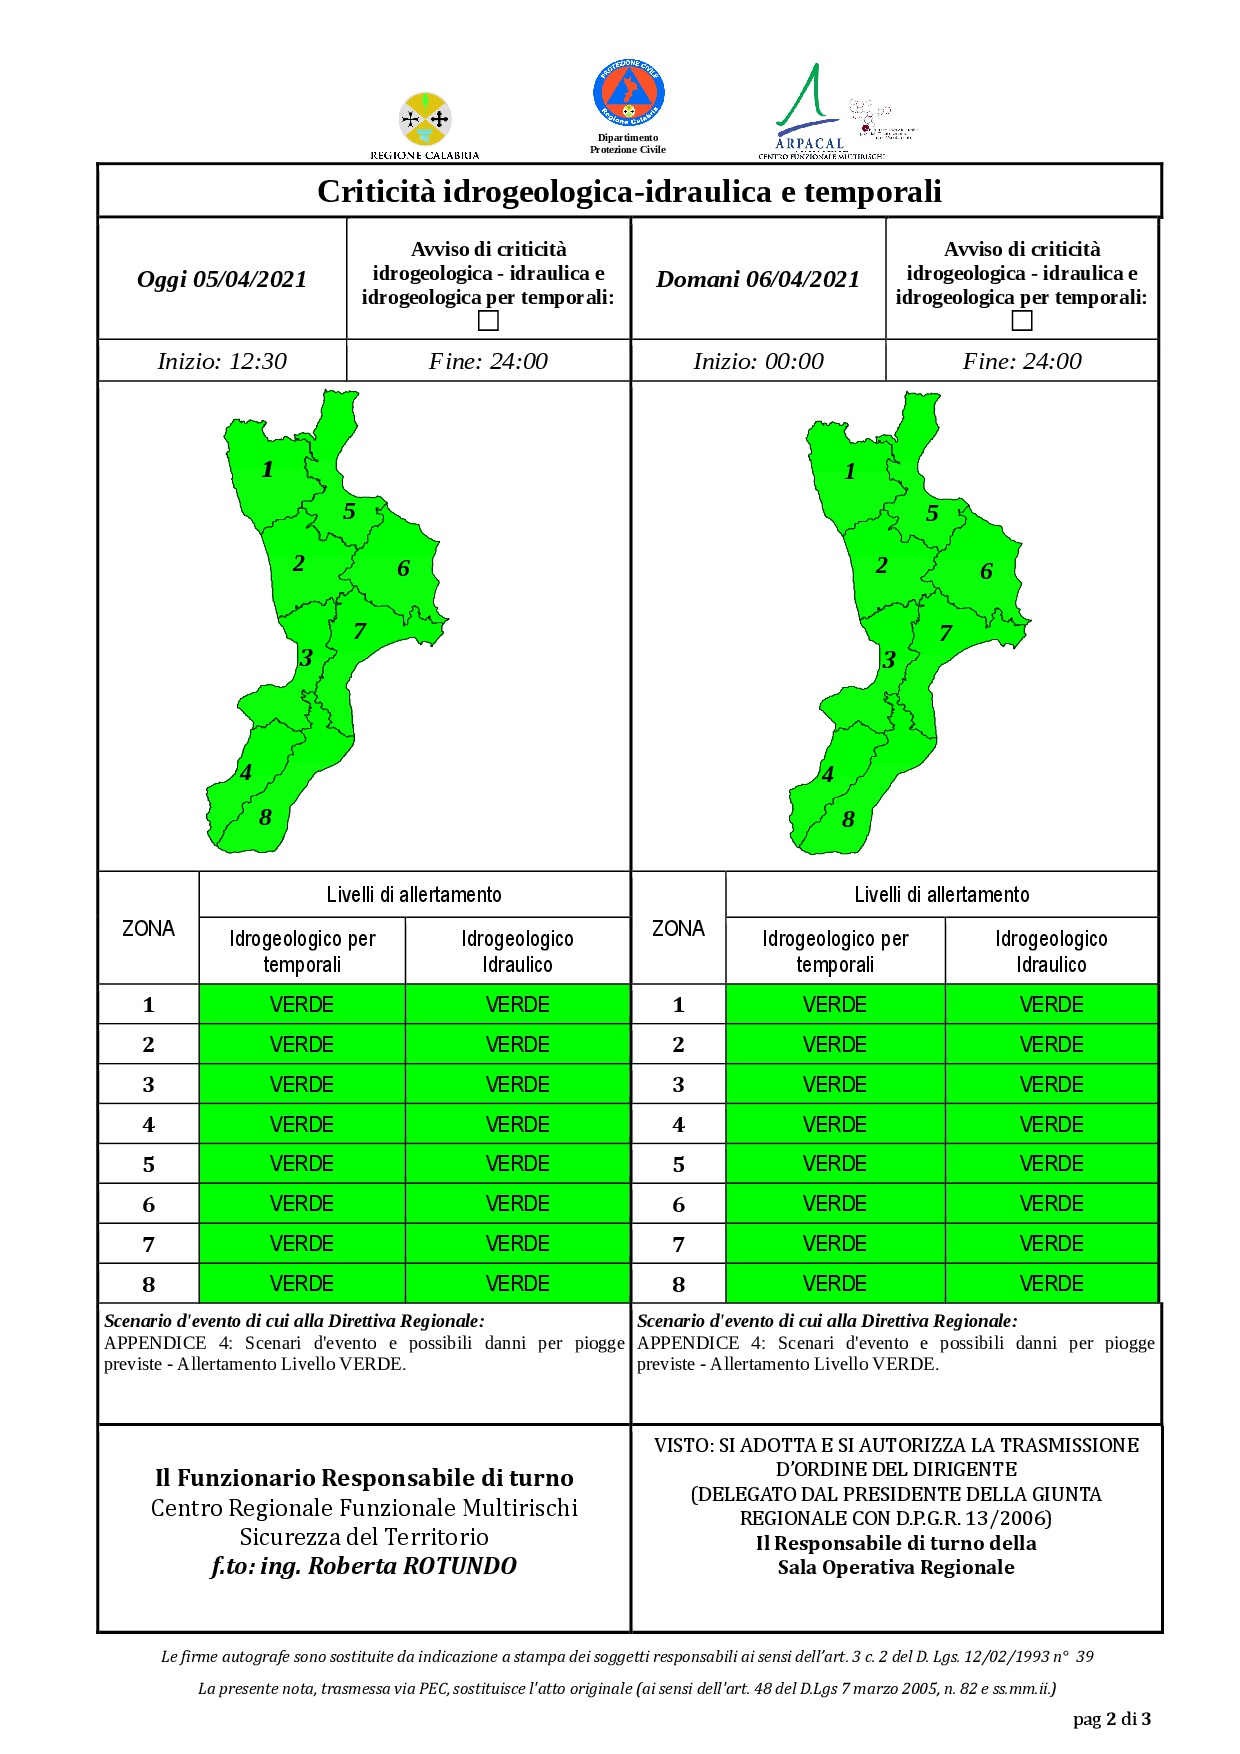 Criticità idrogeologica-idraulica e temporali in Calabria 05-04-2021